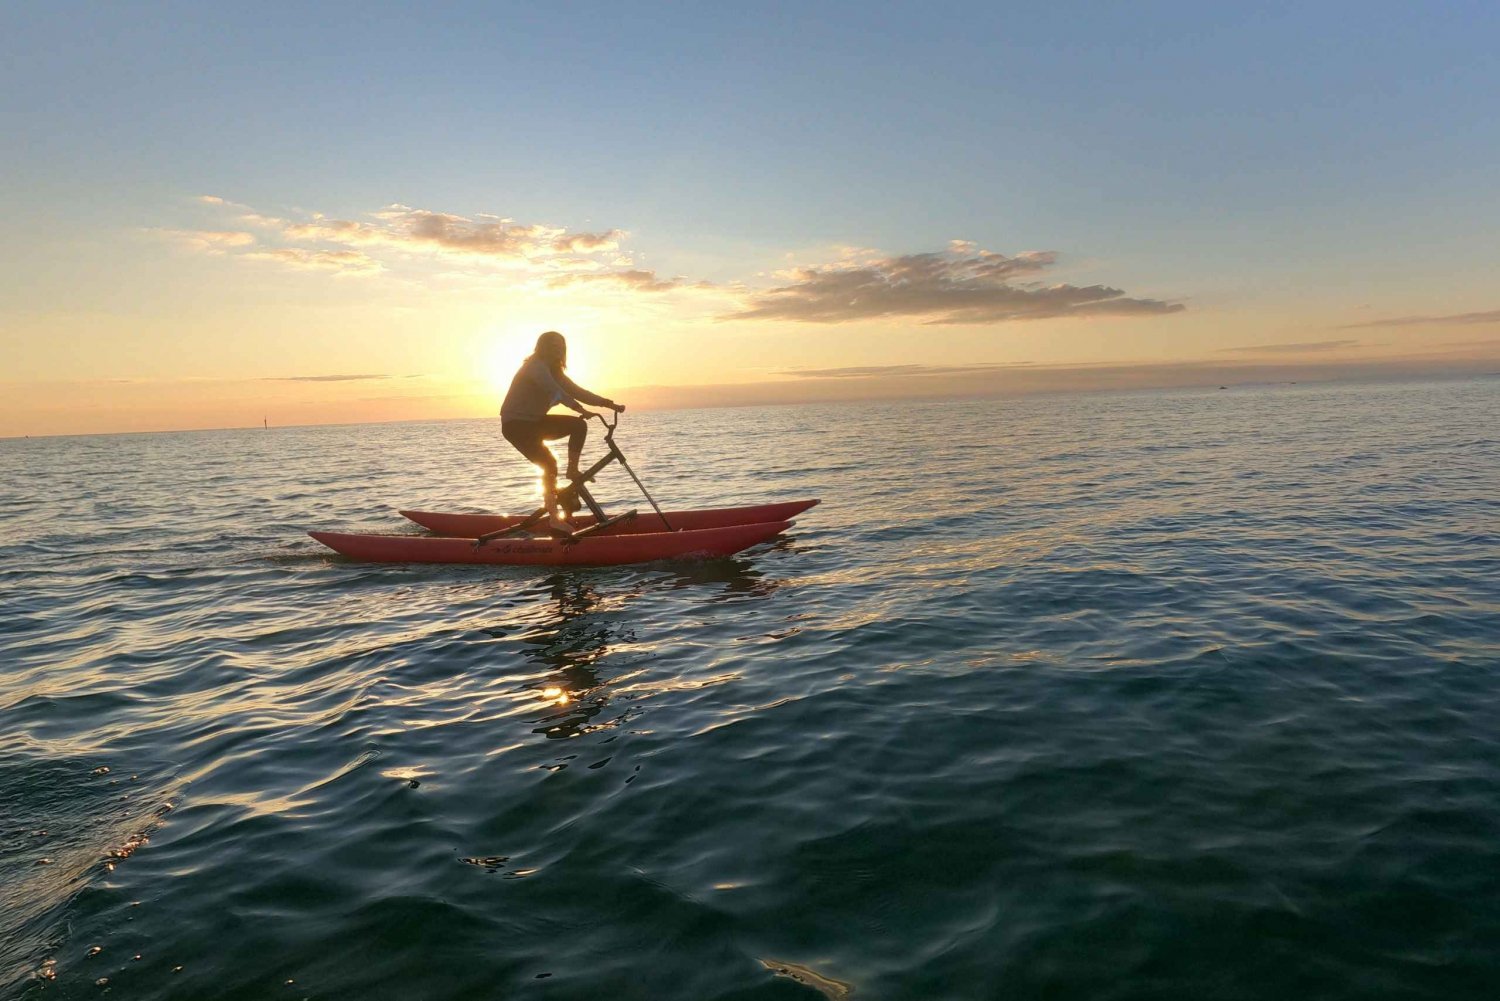 Frankston: Port Phillip Bay Water Bike Tour